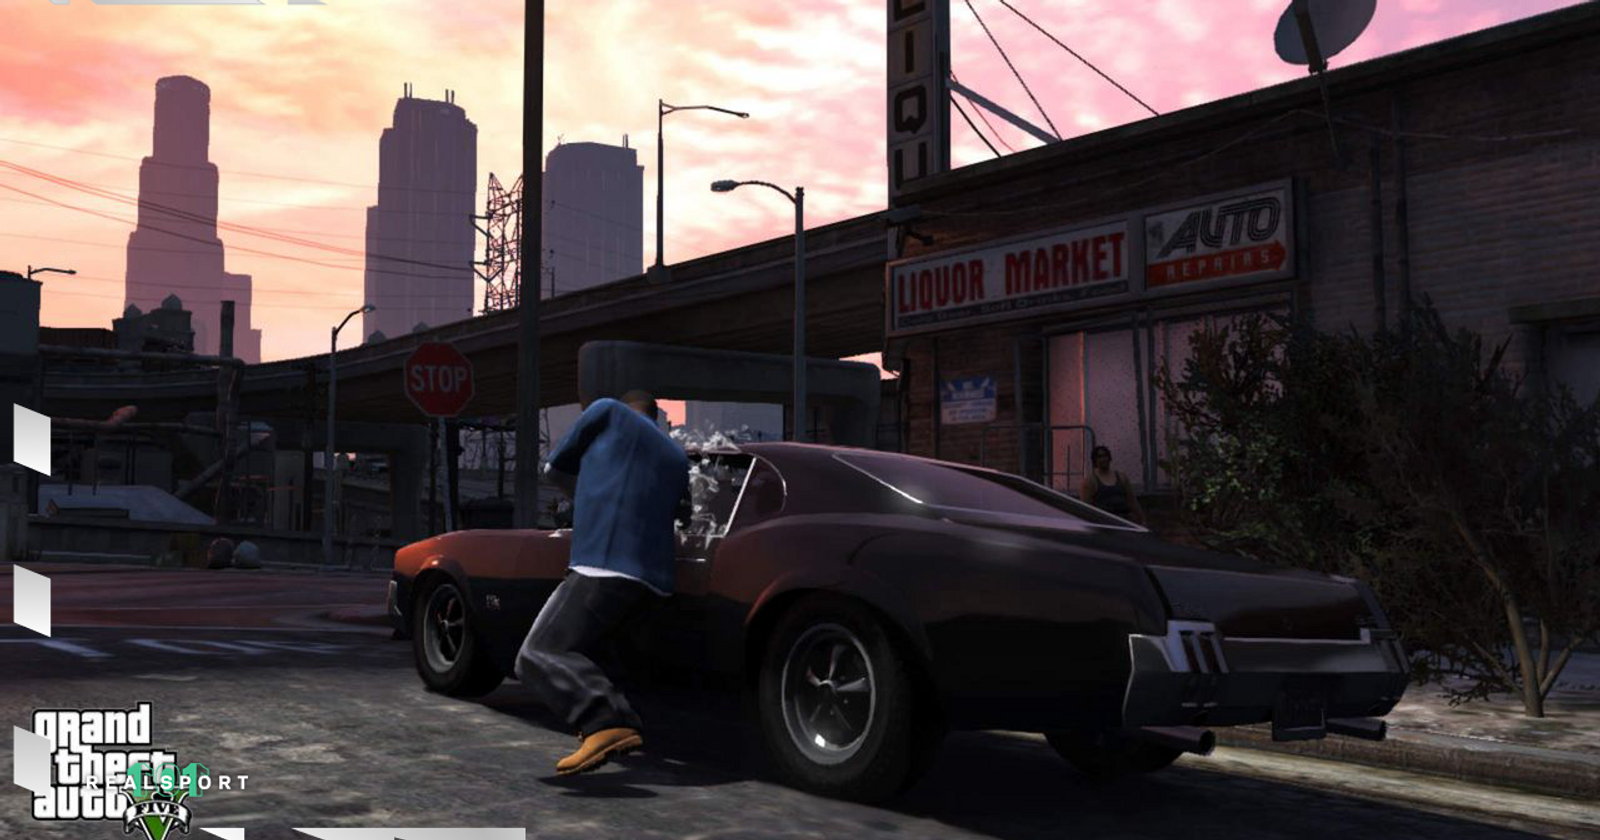 GTA Online's Los Santos Tuners Update Is Now Live - Game Informer